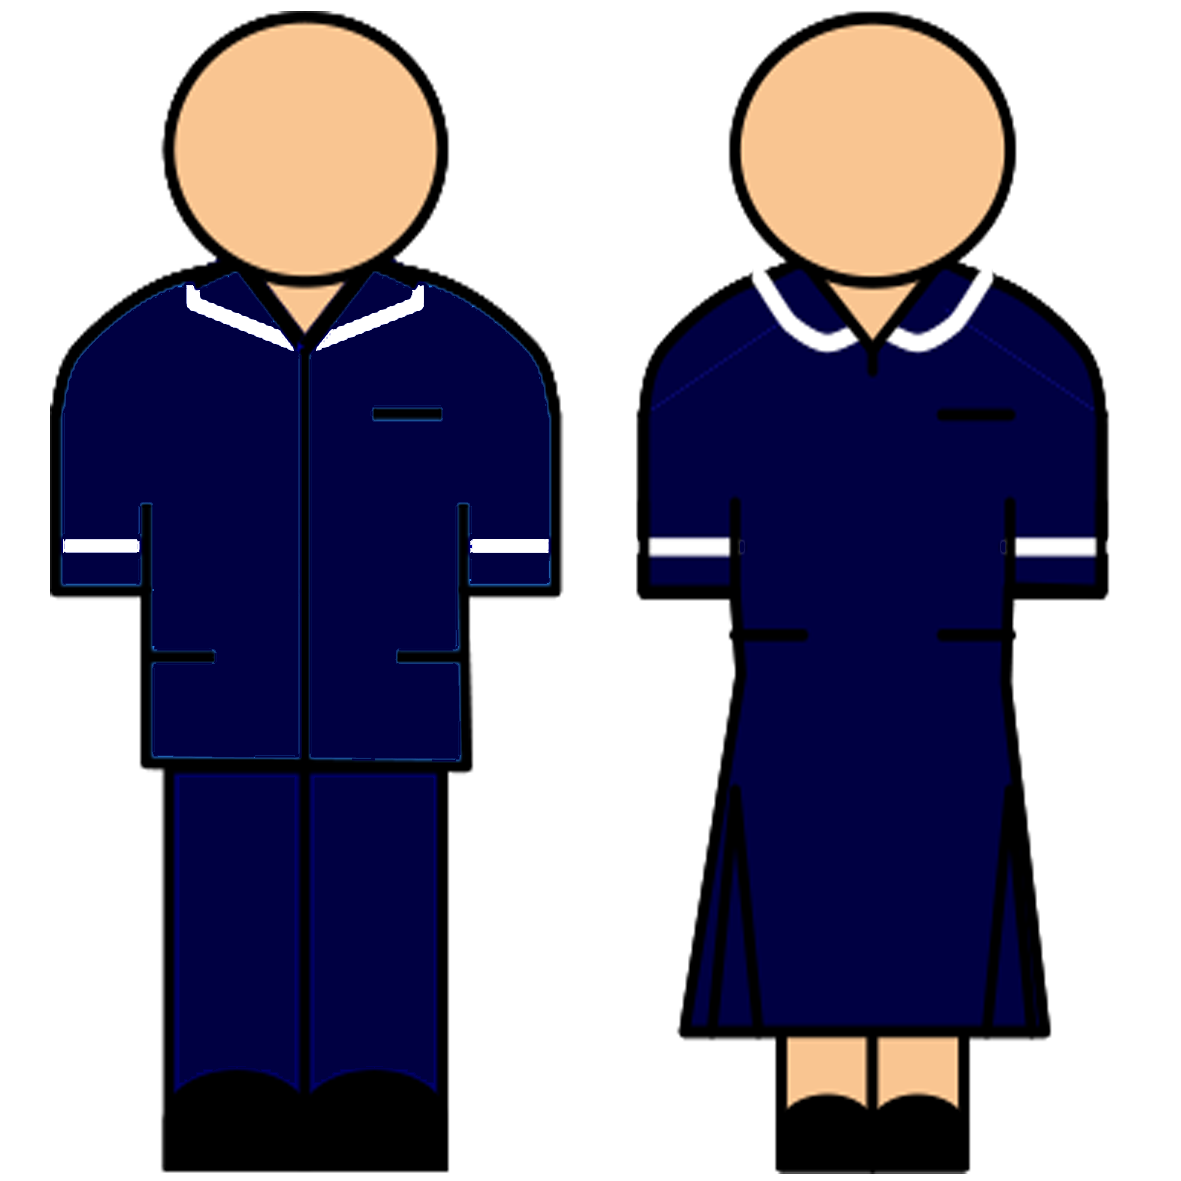 Blue uniform with white stripe